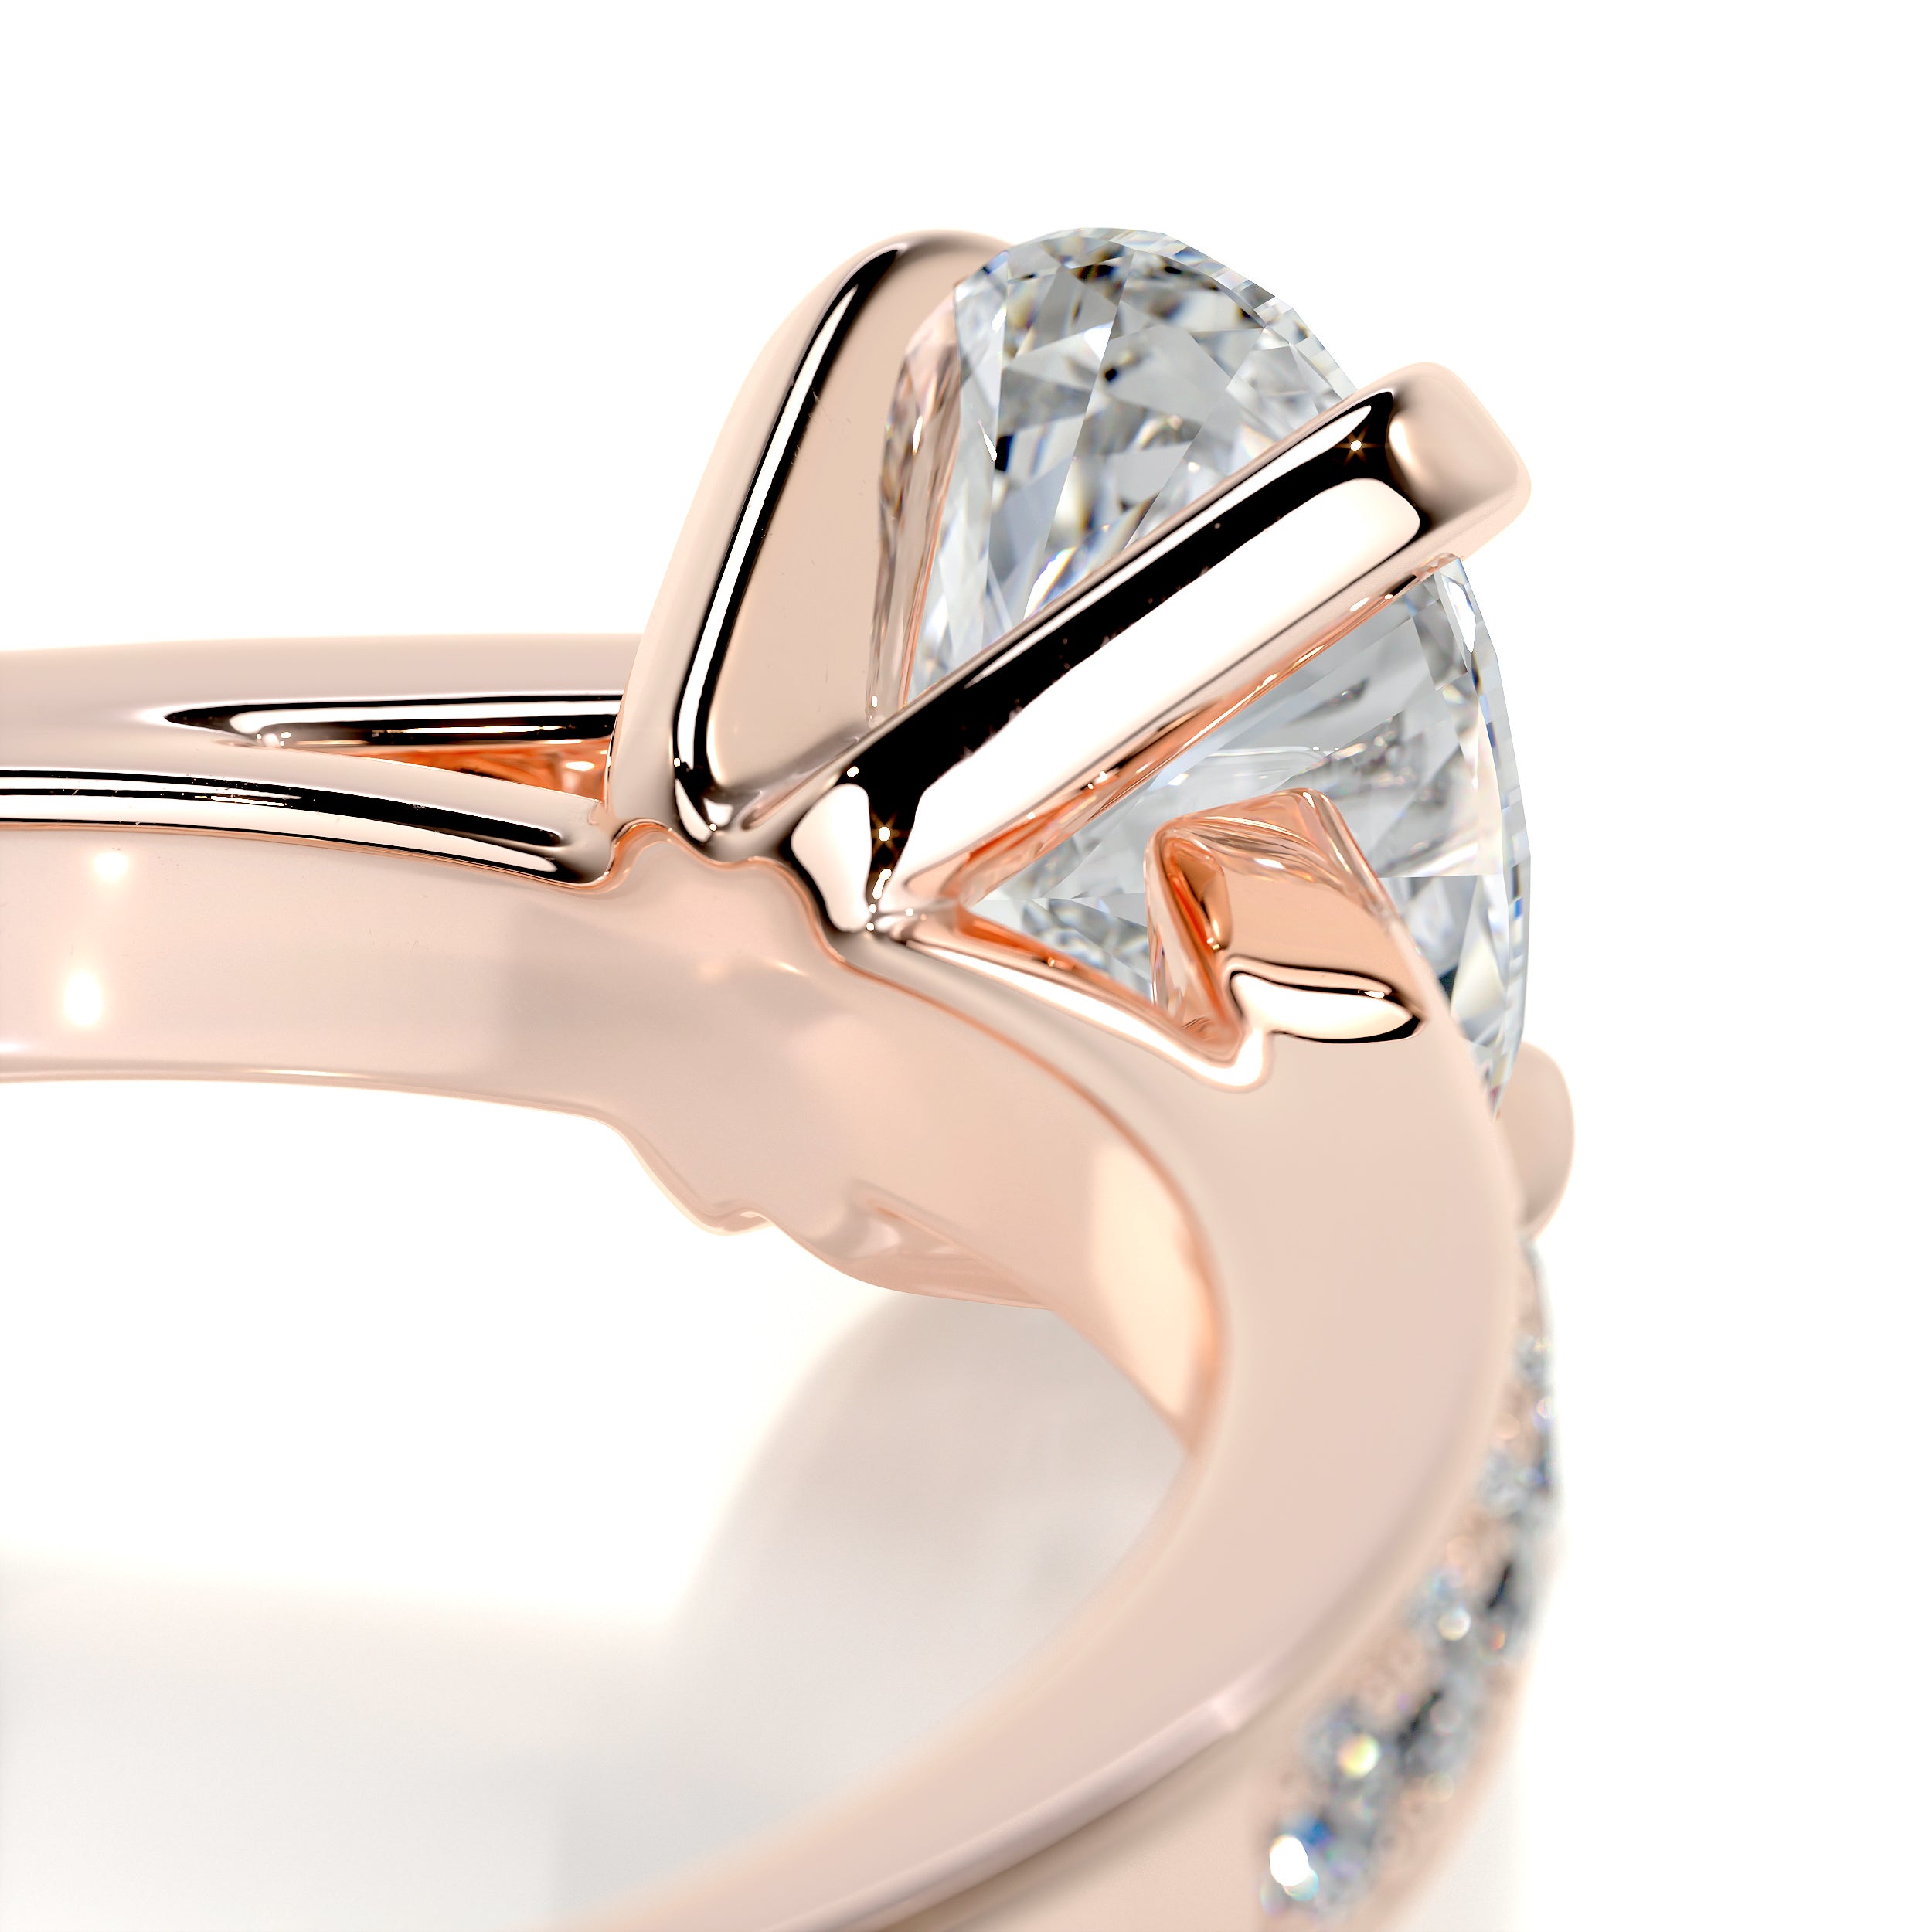 Talia Diamond Engagement Ring   (1 Carat) -14K Rose Gold